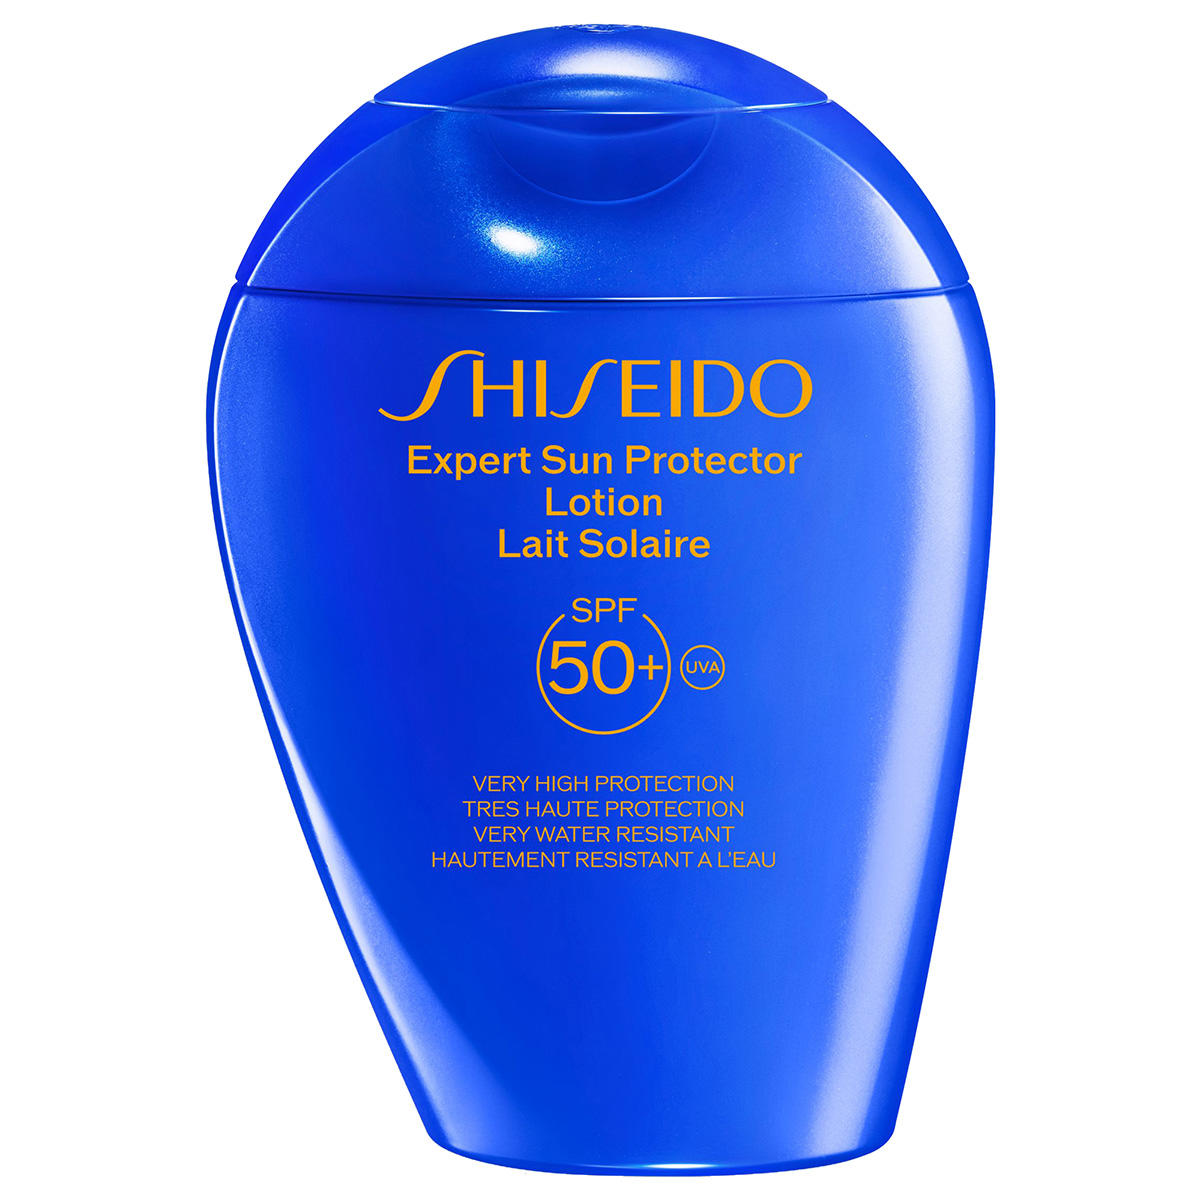 Shiseido Expert Sun Protector Lotion SPF 50+ 150 ml